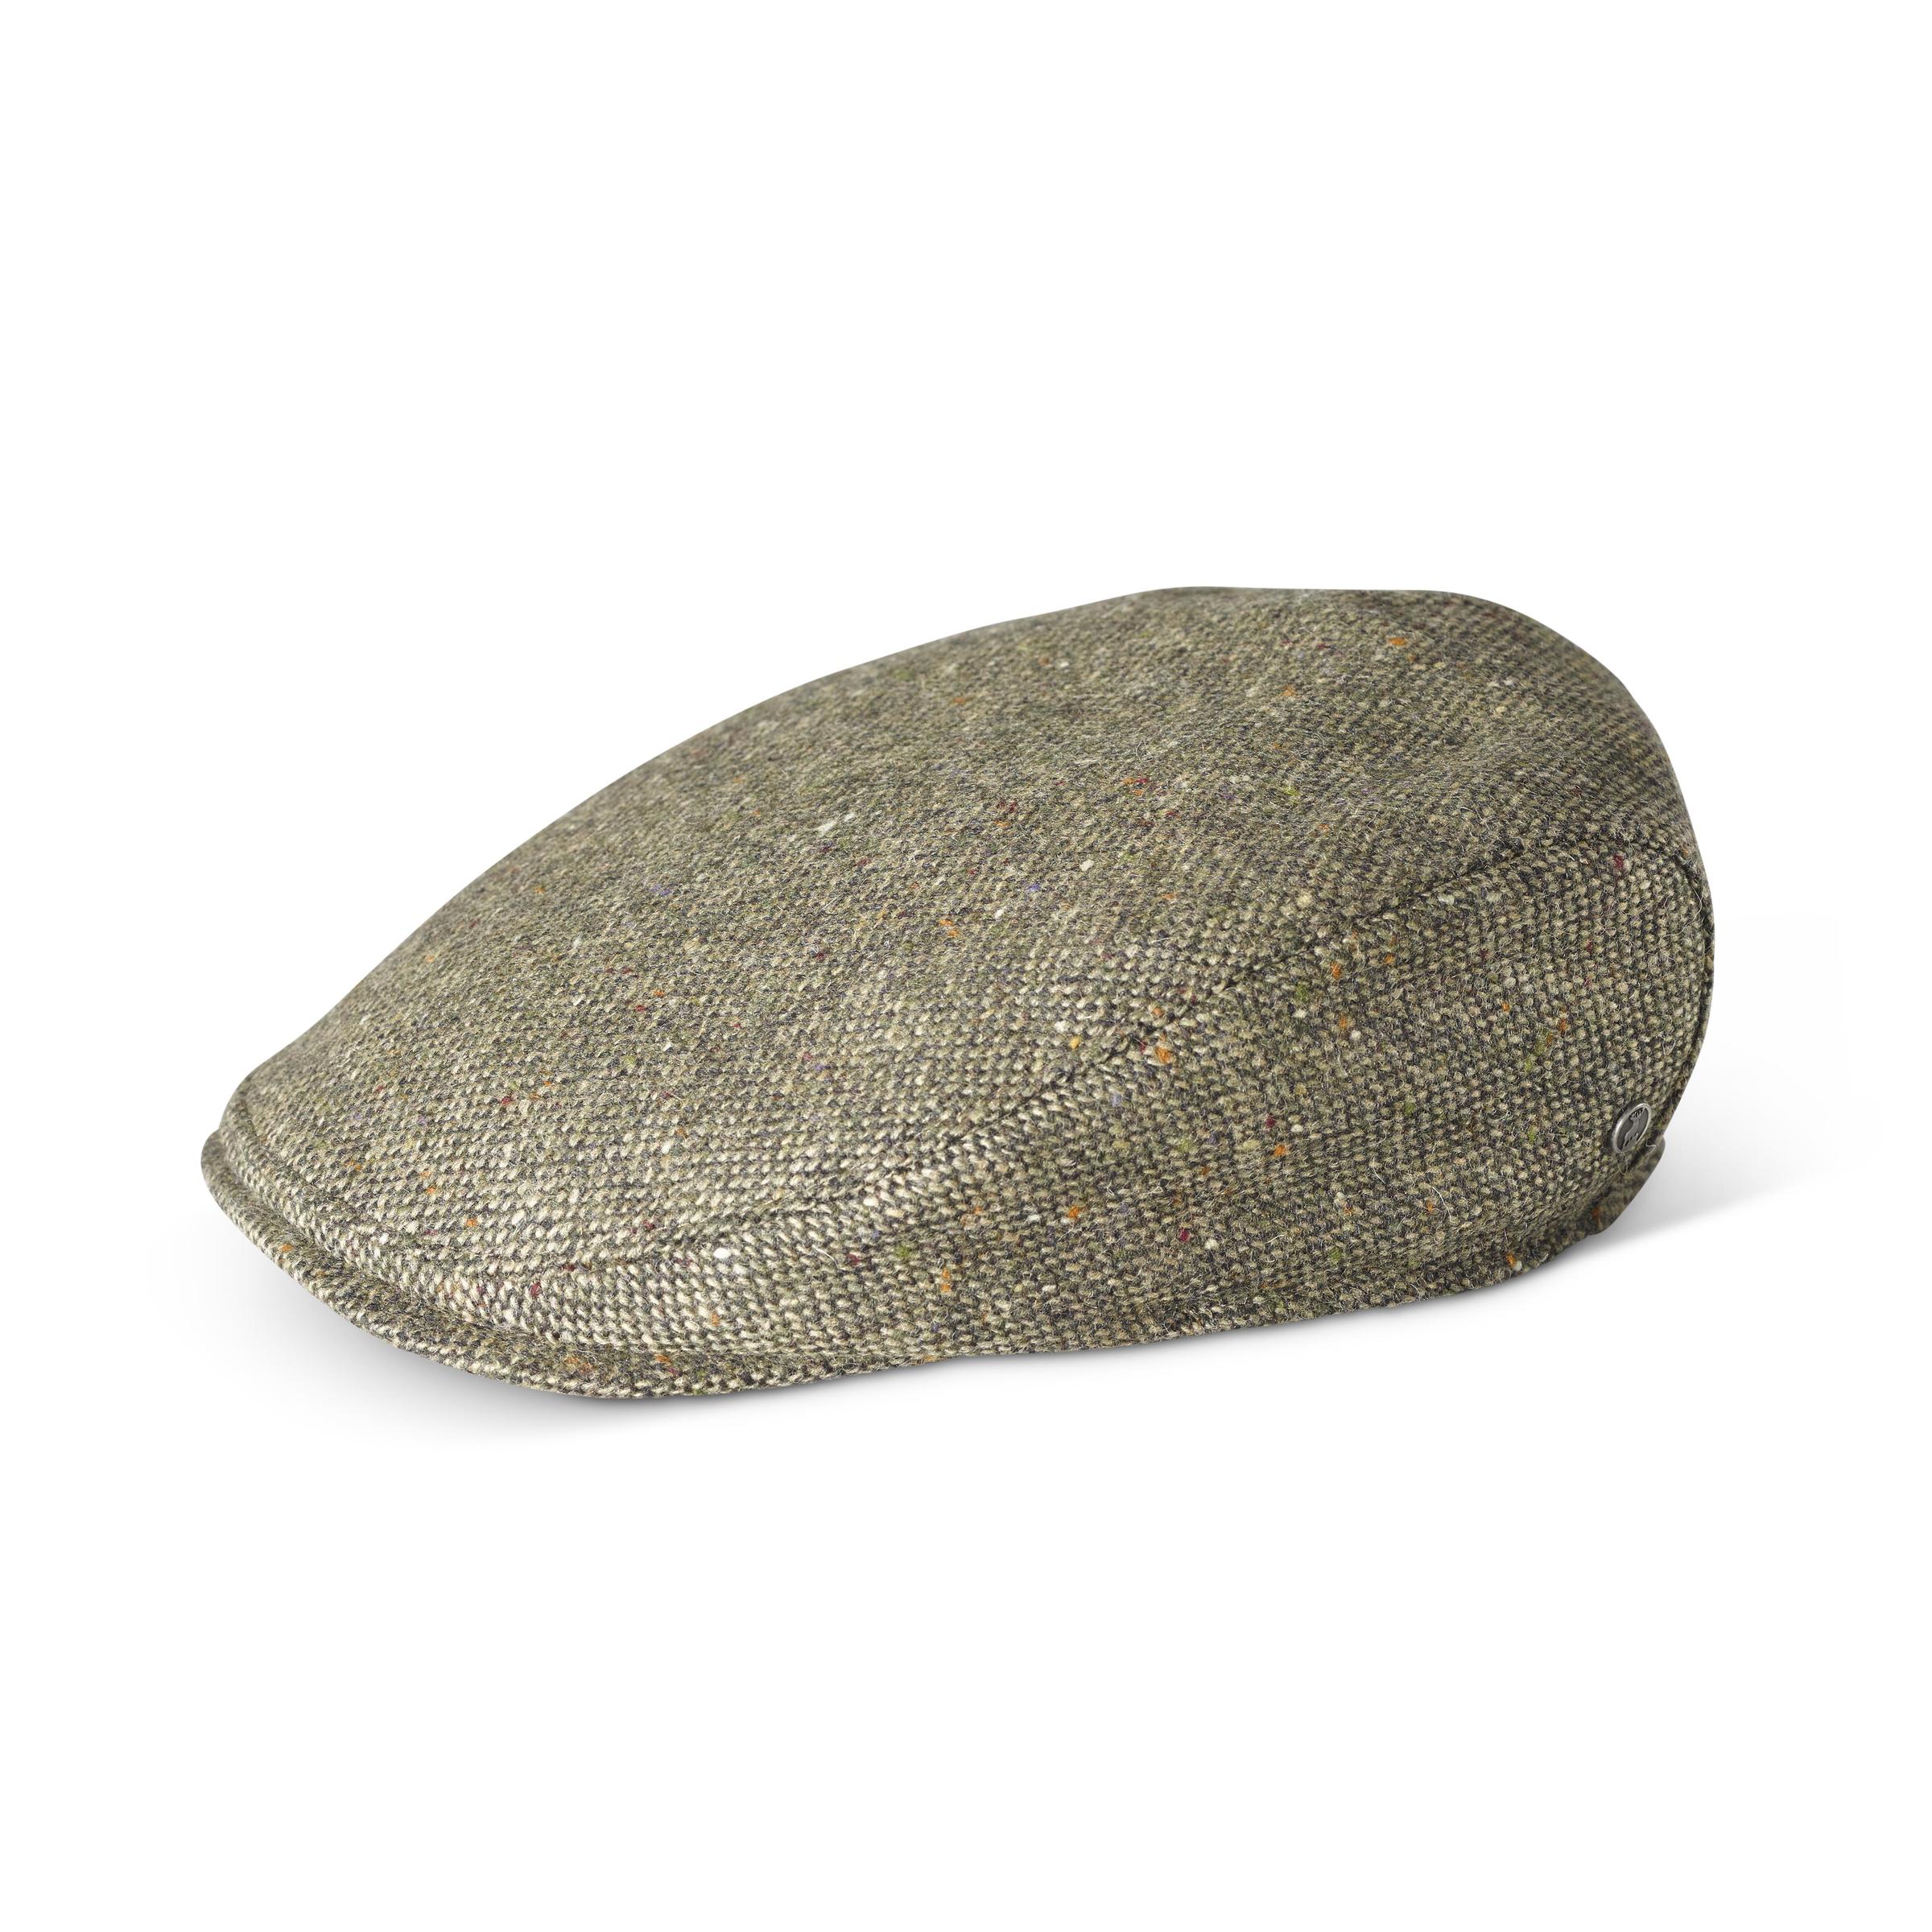 Product image for Irish Hat | Green Salt & Pepper Wool Donegal Tweed Cap